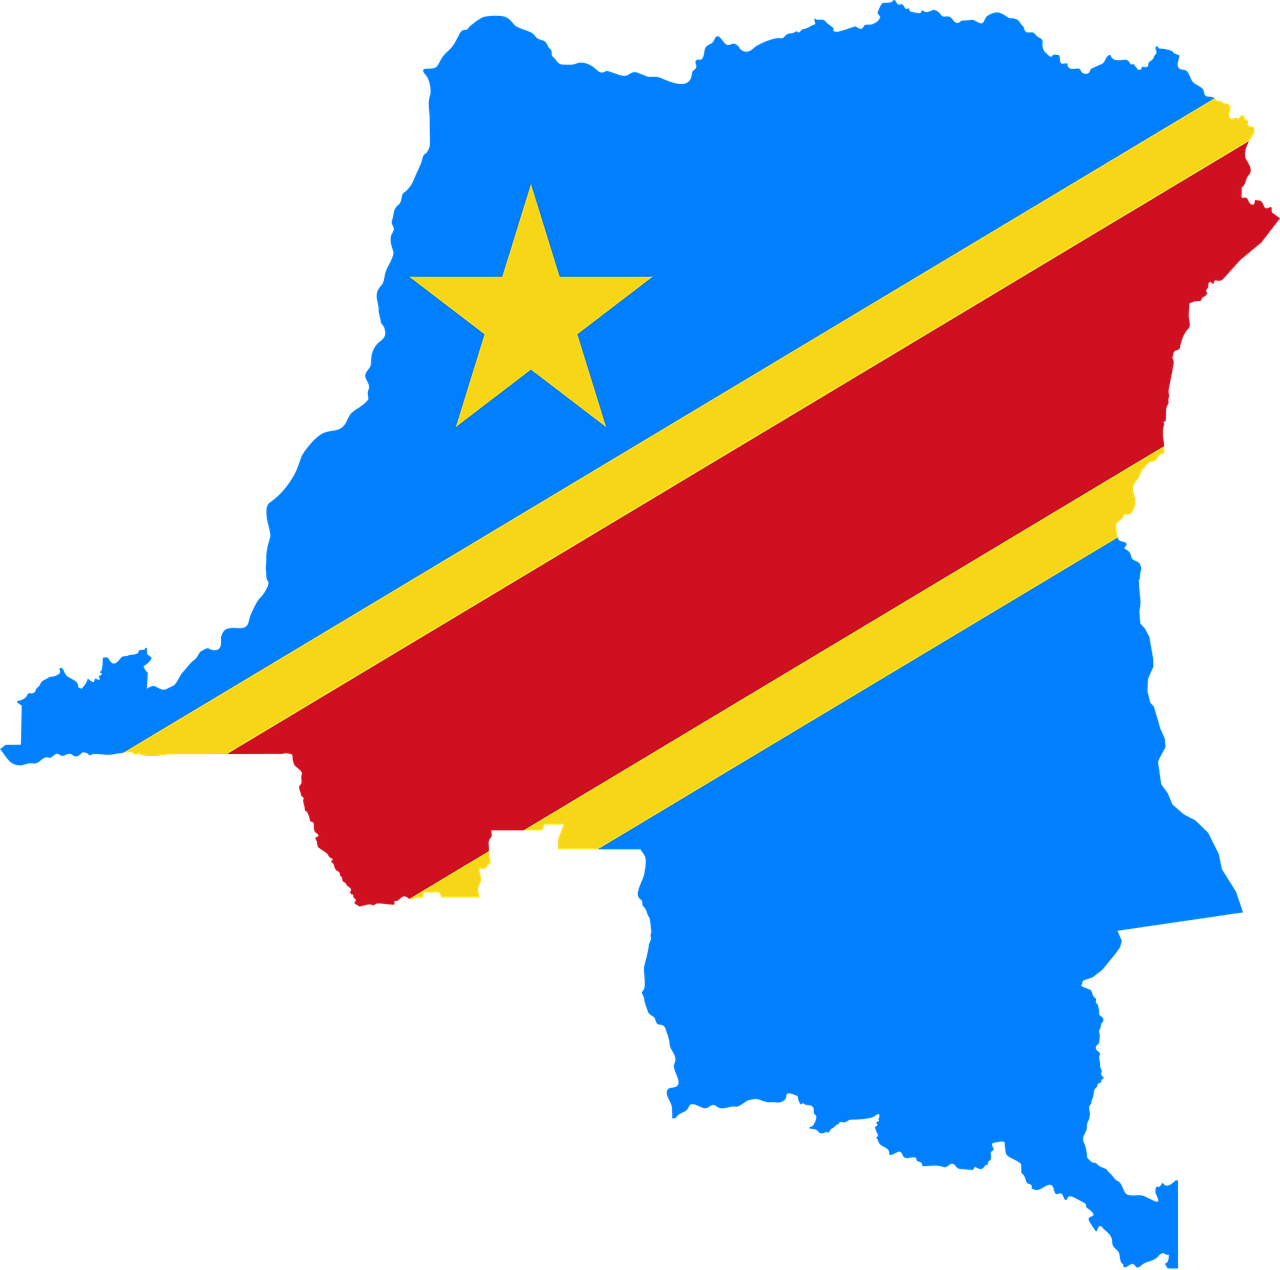 Download free photo of Democratic republic of the congo,flag,congo,map ...